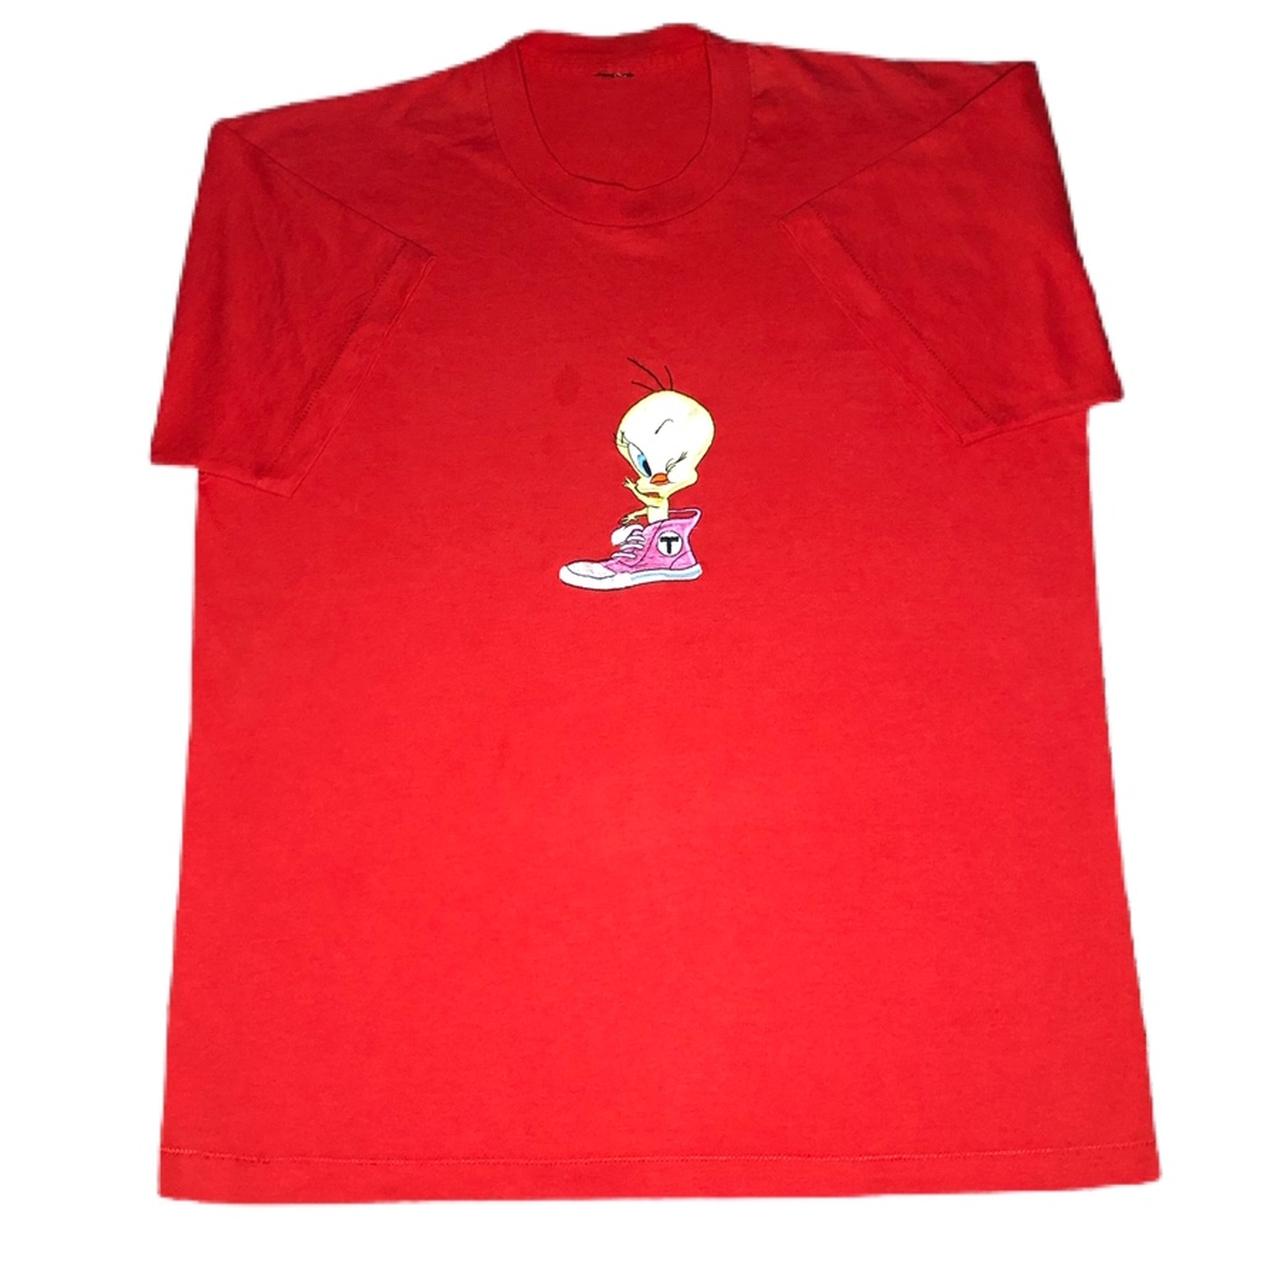 Looney Tunes Men's Red T-shirt